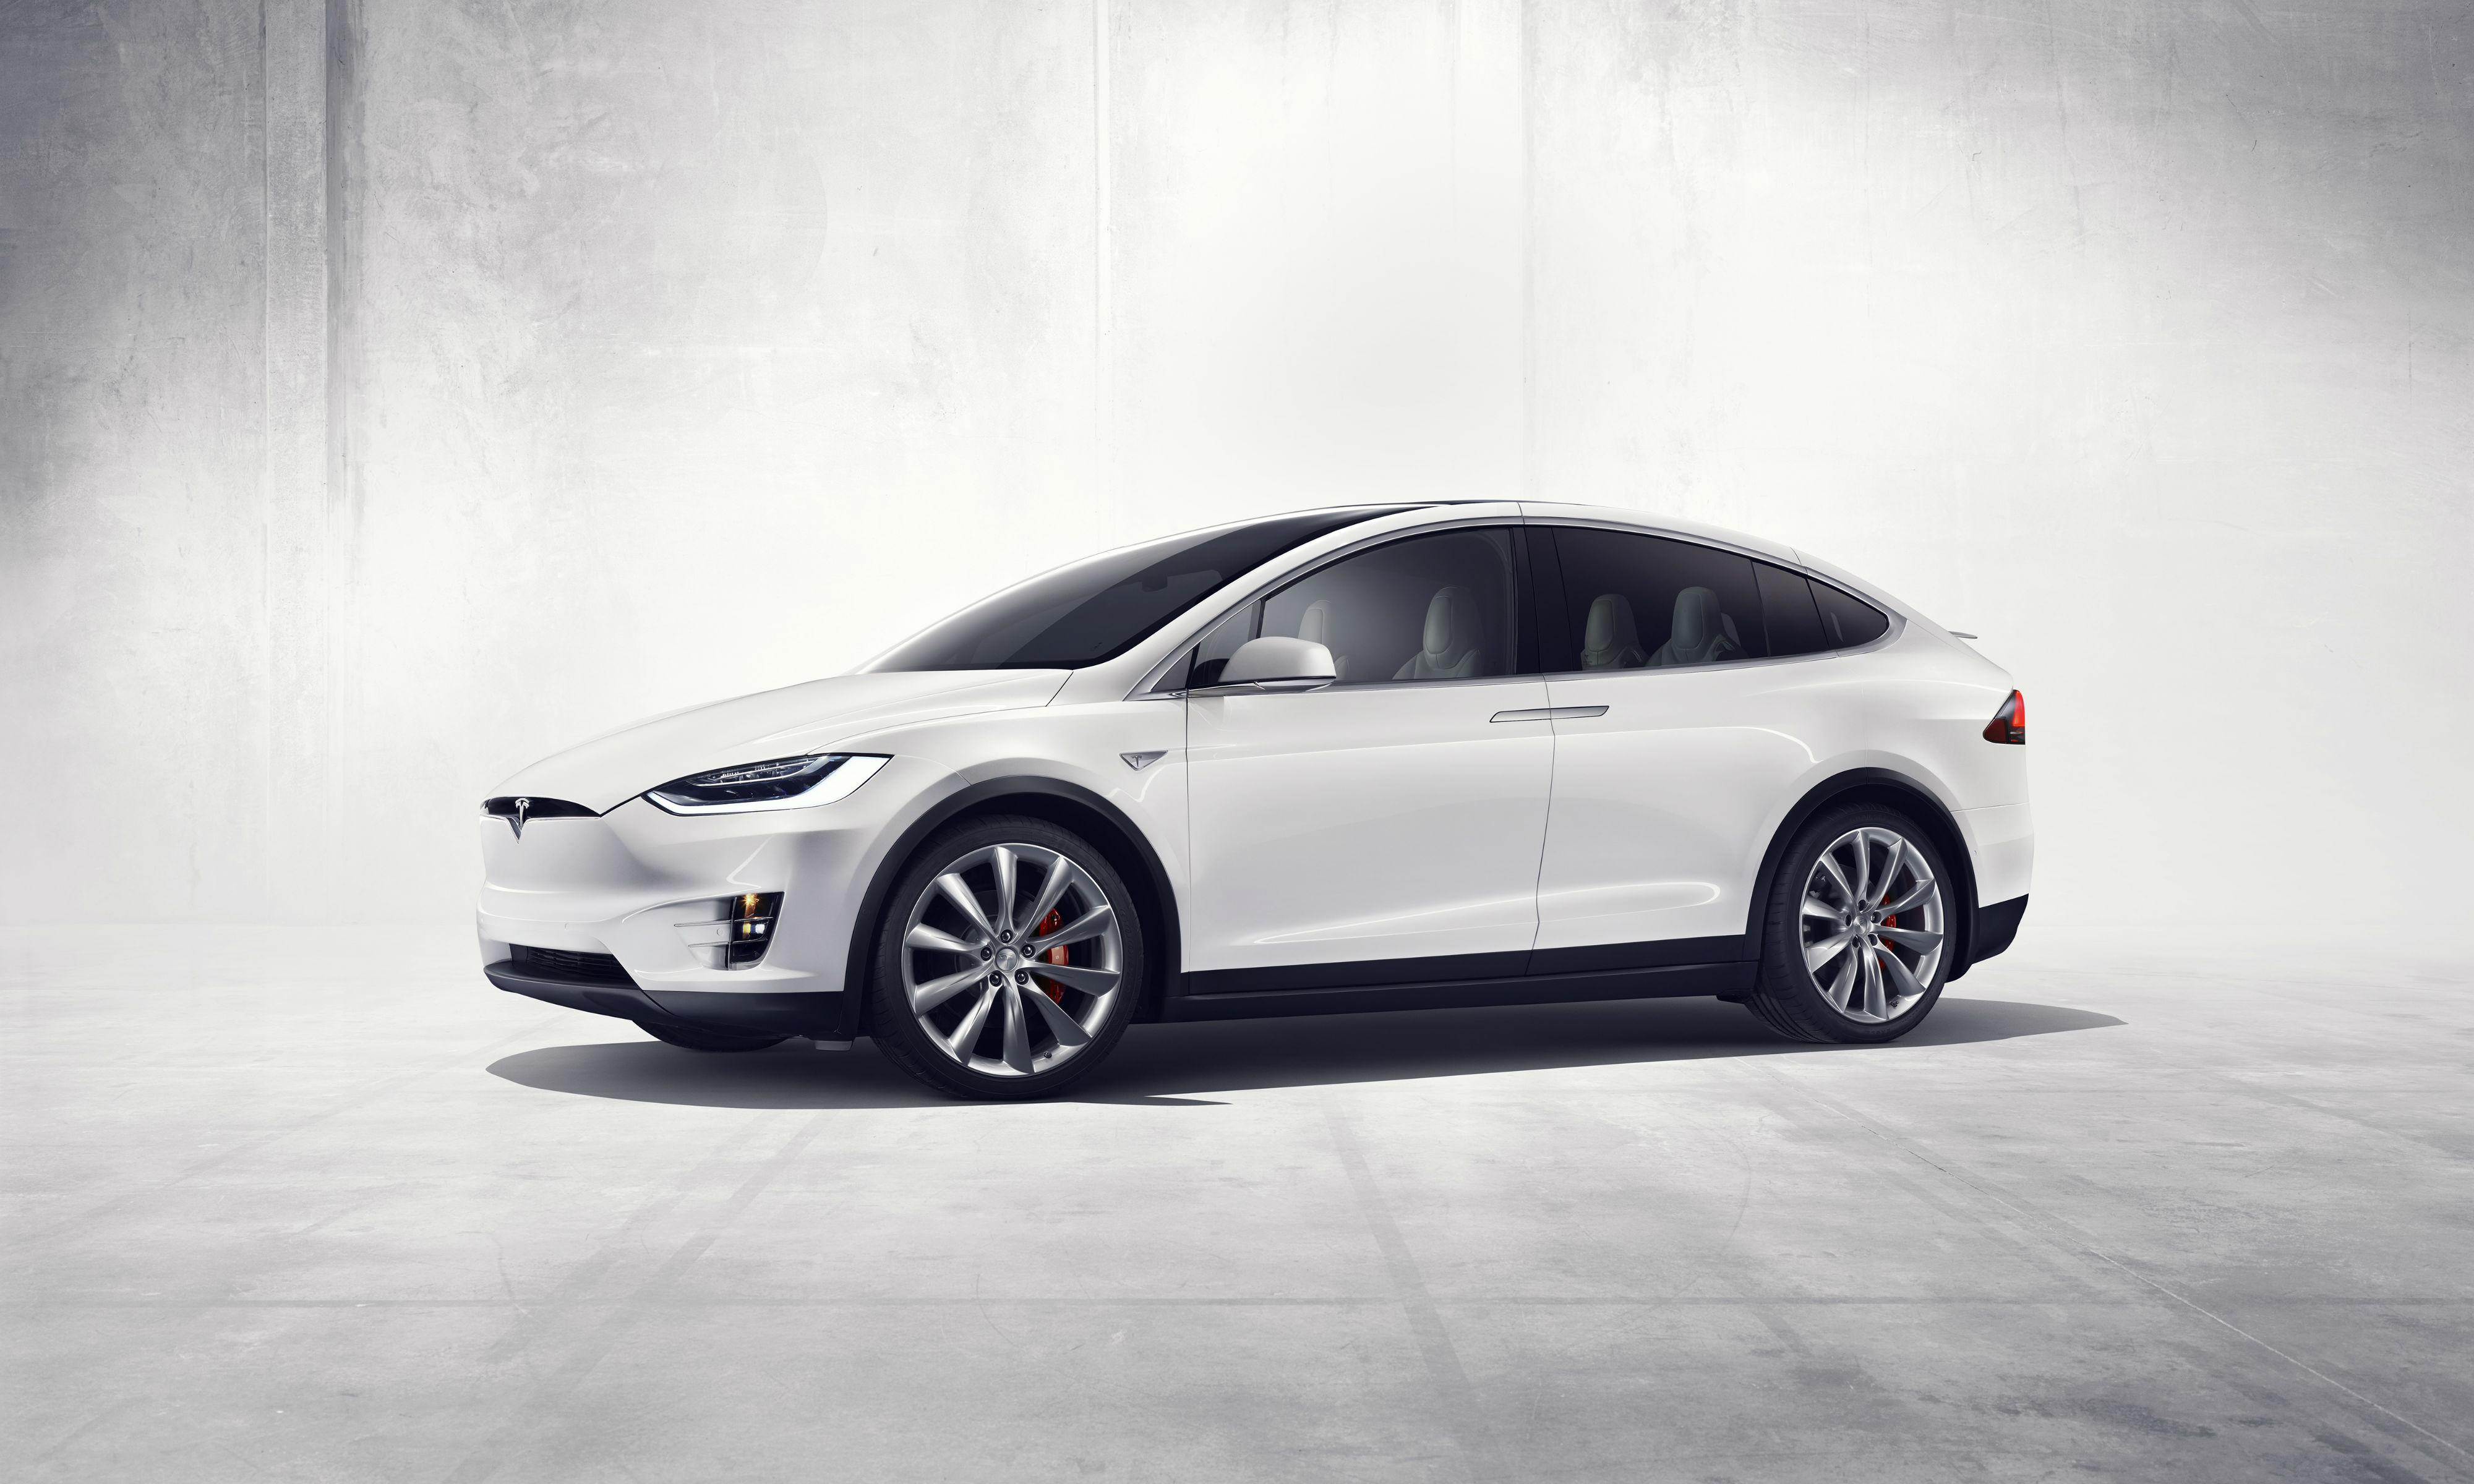 Tesla Model X pictures, price, full details